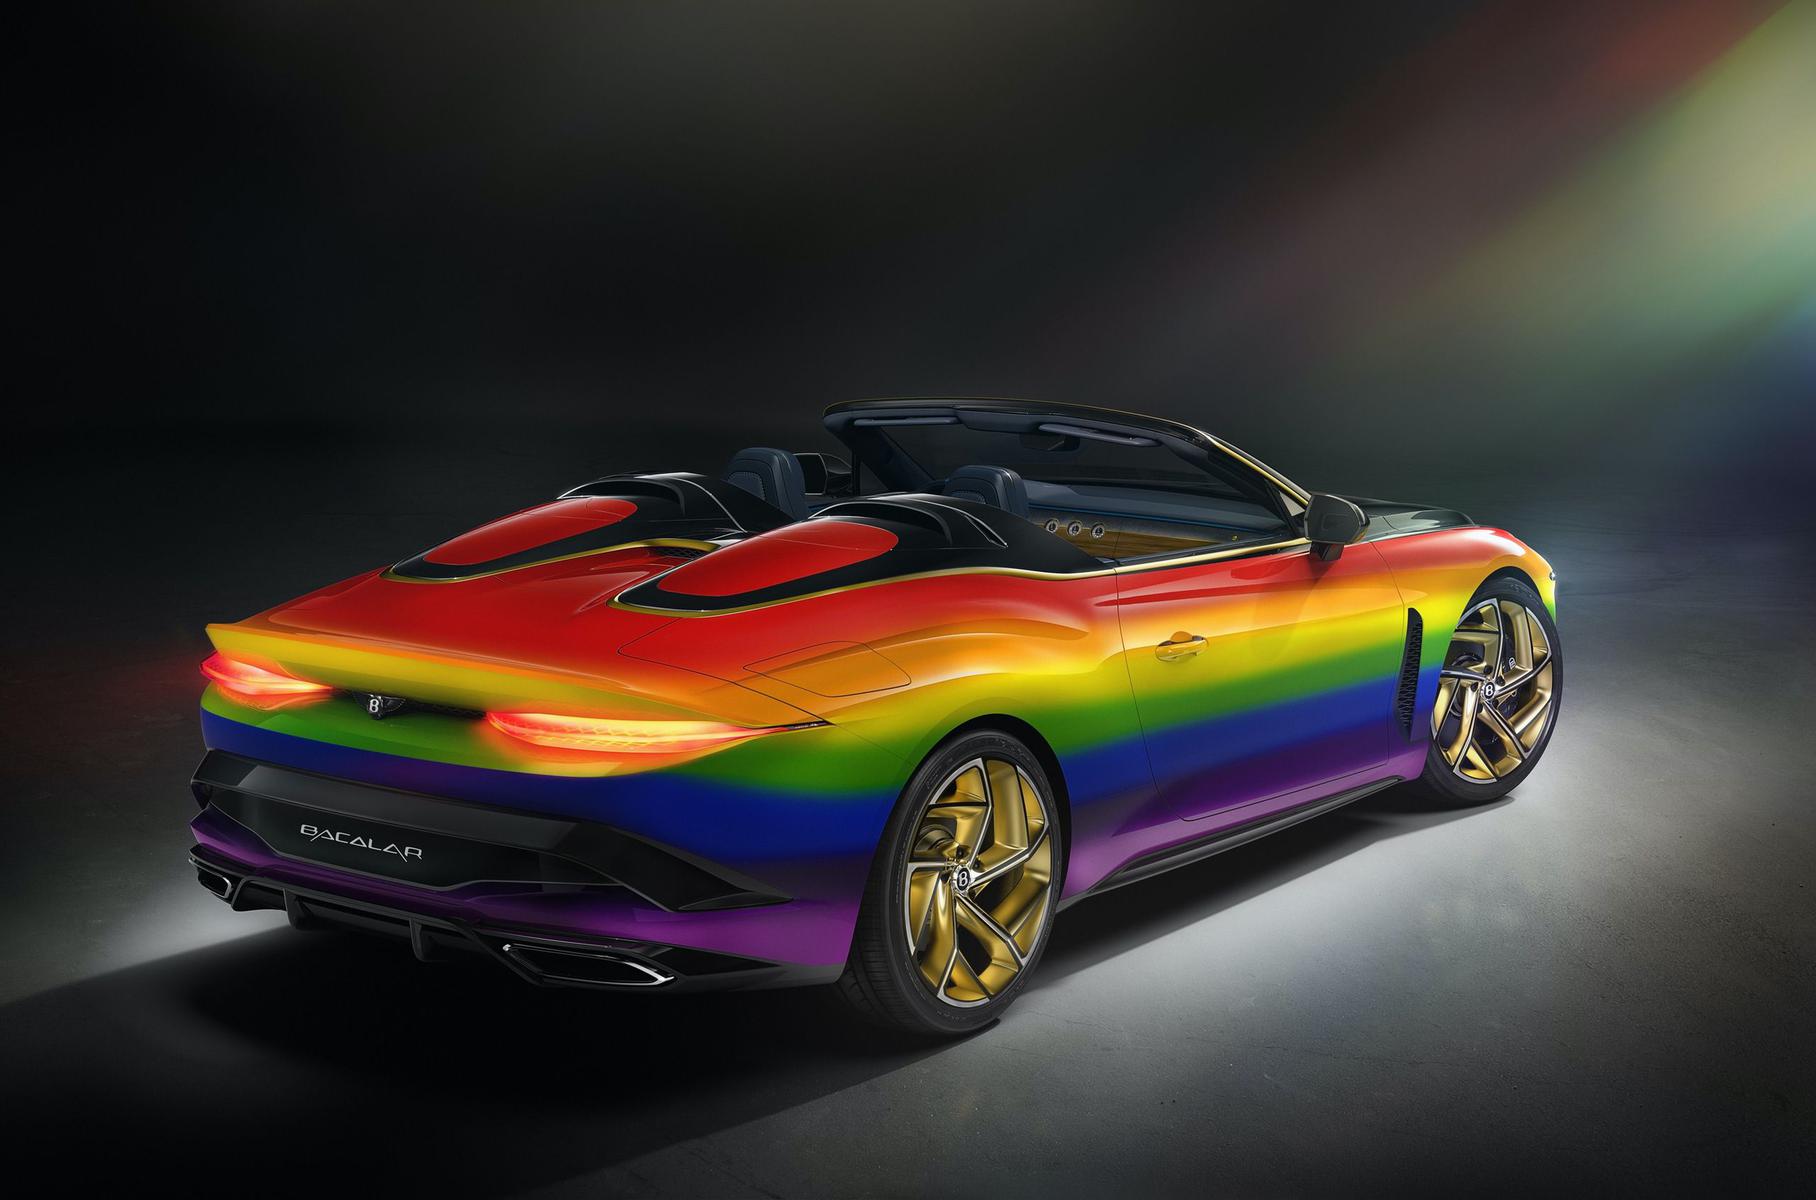 Bentley Bacalar GT Rainbow Car Wrap 2020 Bunter Hund   Bentley Continental GT als Rainbow Car!